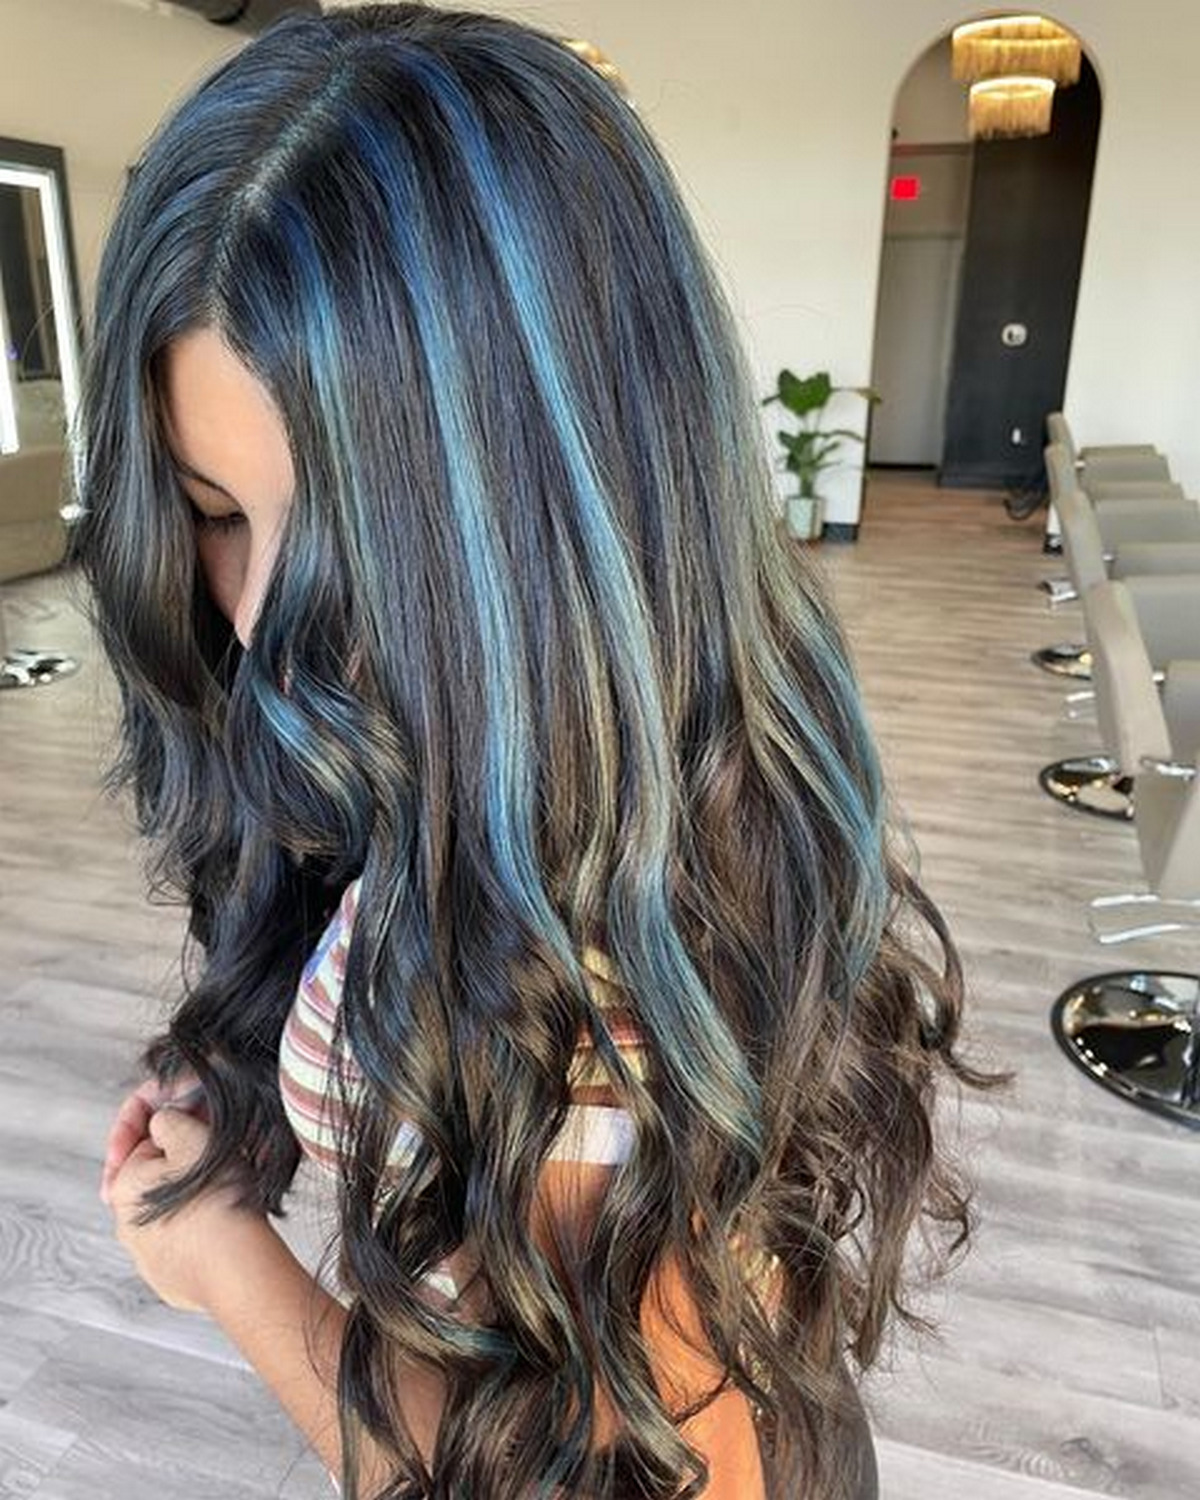 Black Hair And Blue Highlights